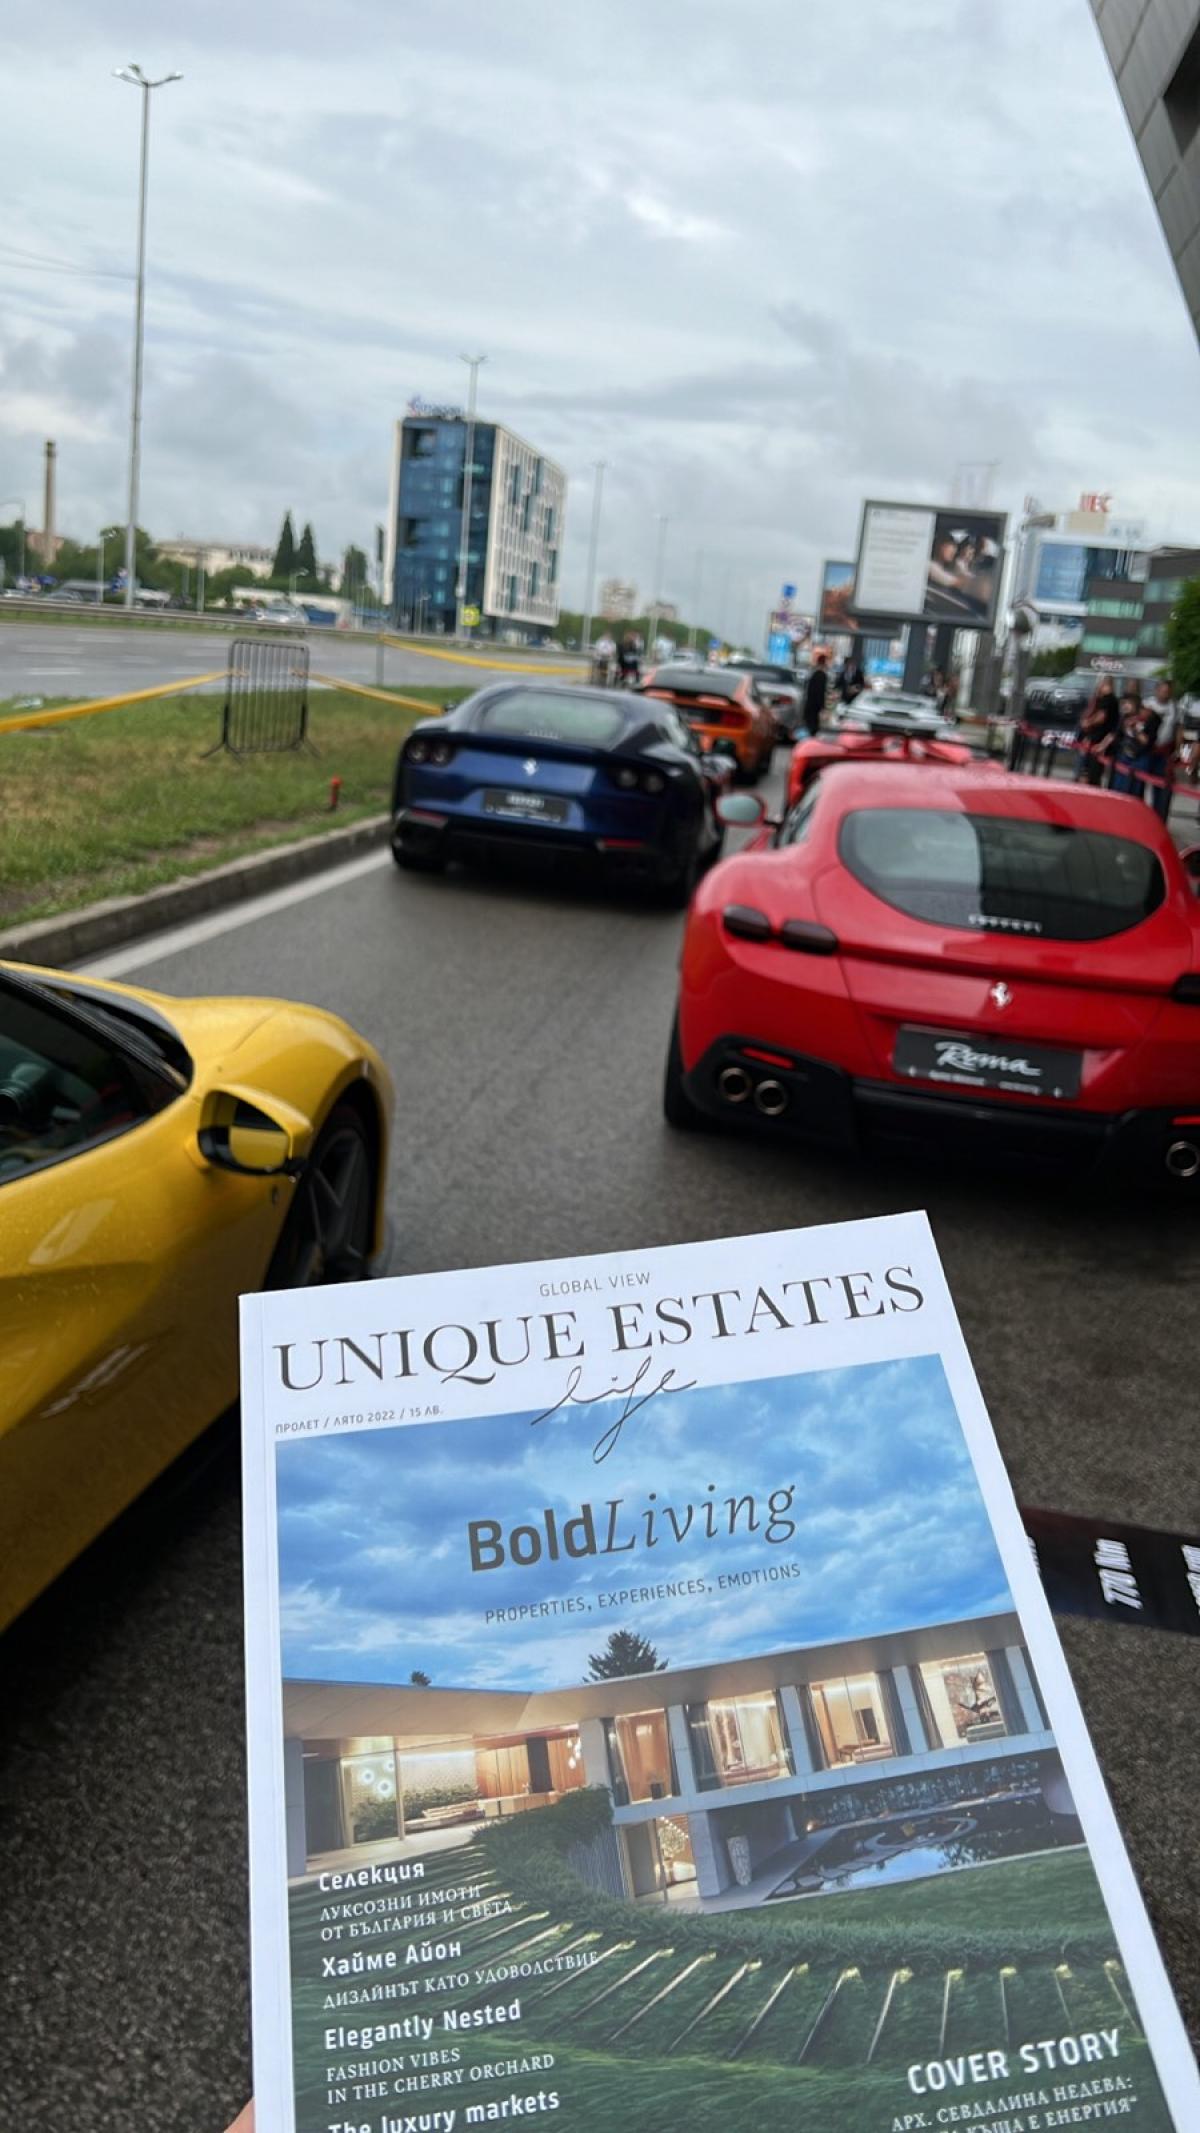 Луксозни имоти на Unique Estates и най-новите суперавтомобили на Sofia Festival of Speed - image 5